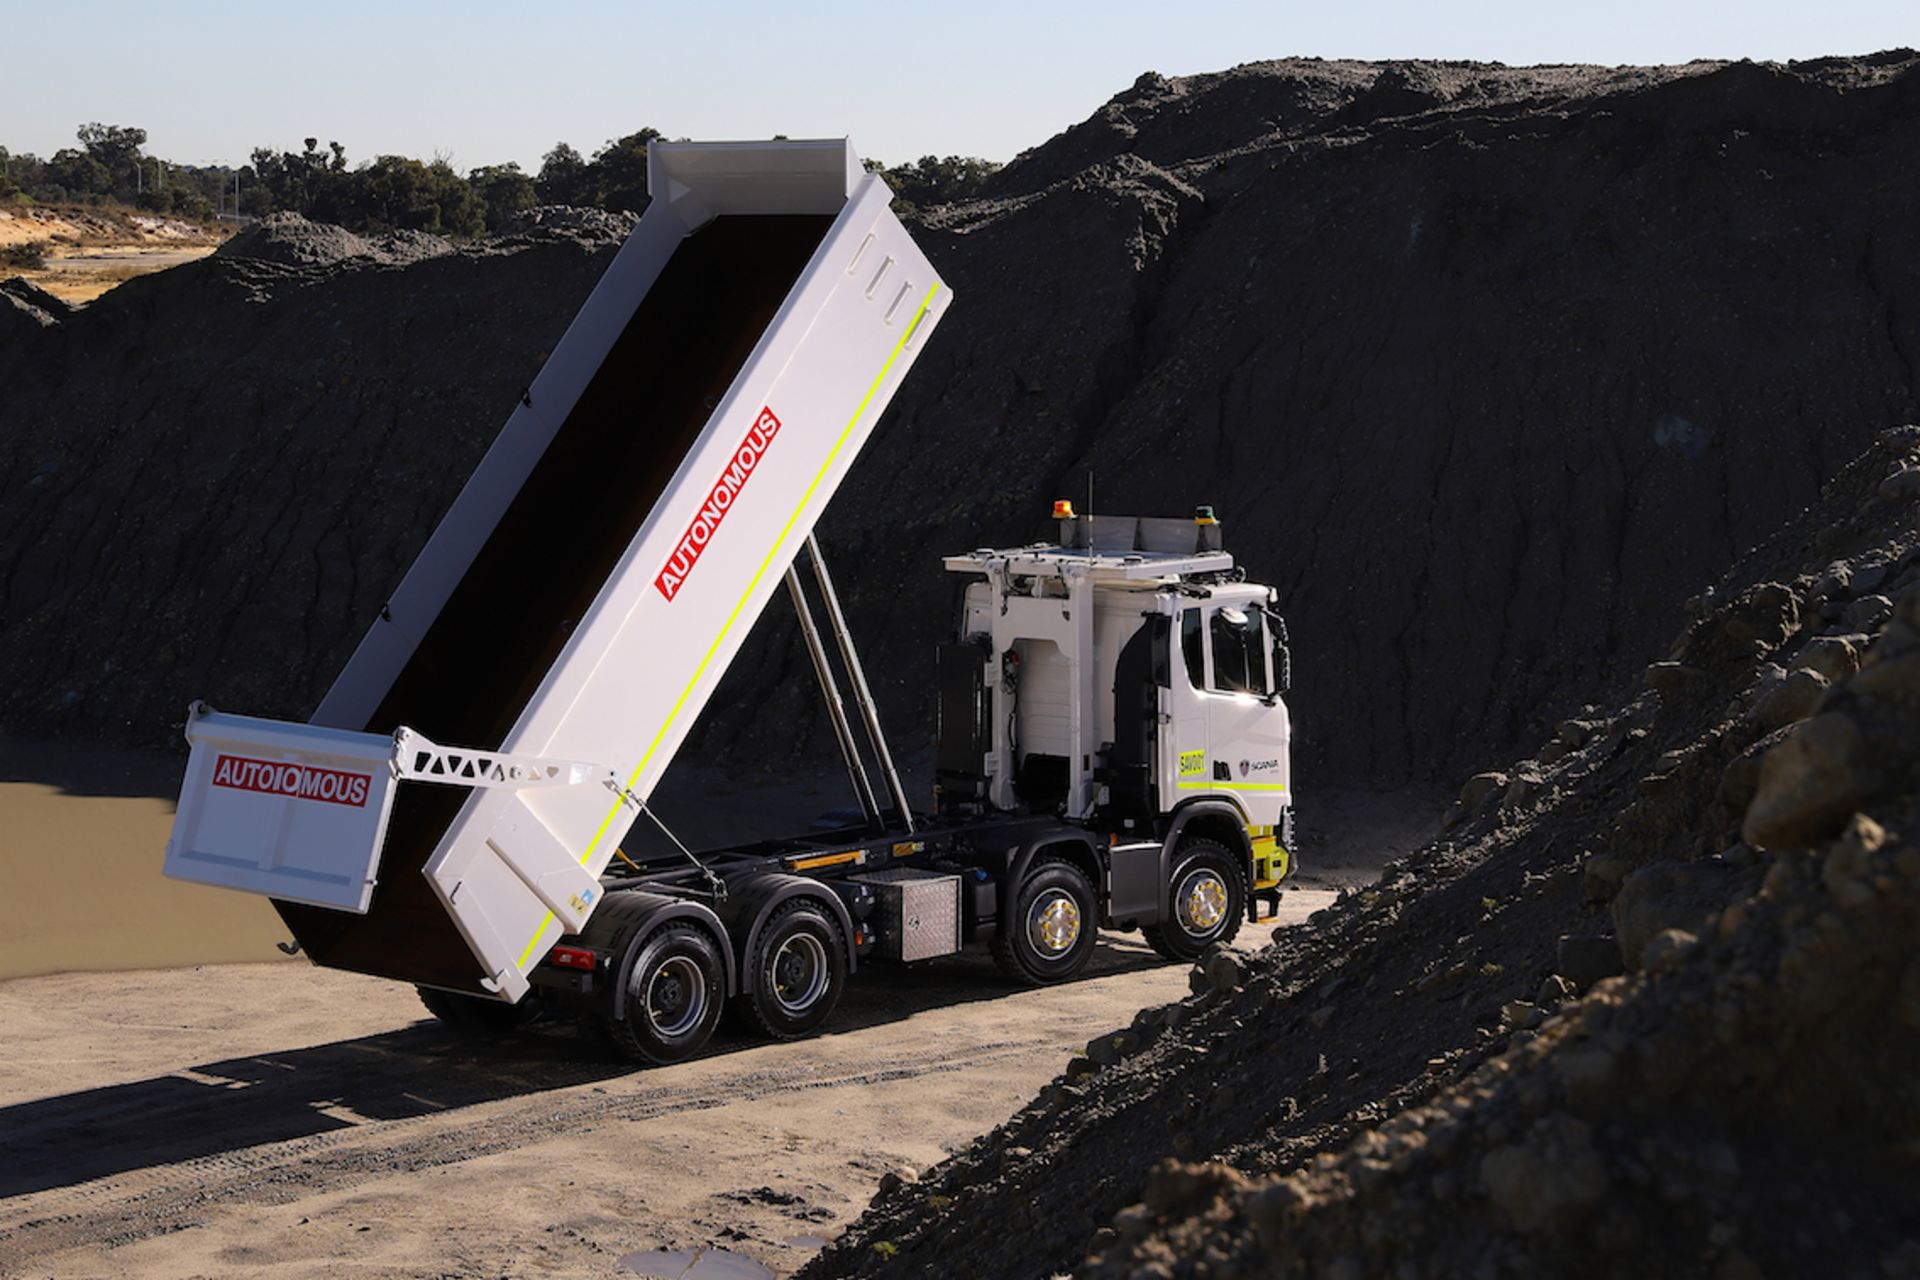 Scania autonomous truck on test with Rio Tinto in salt mine